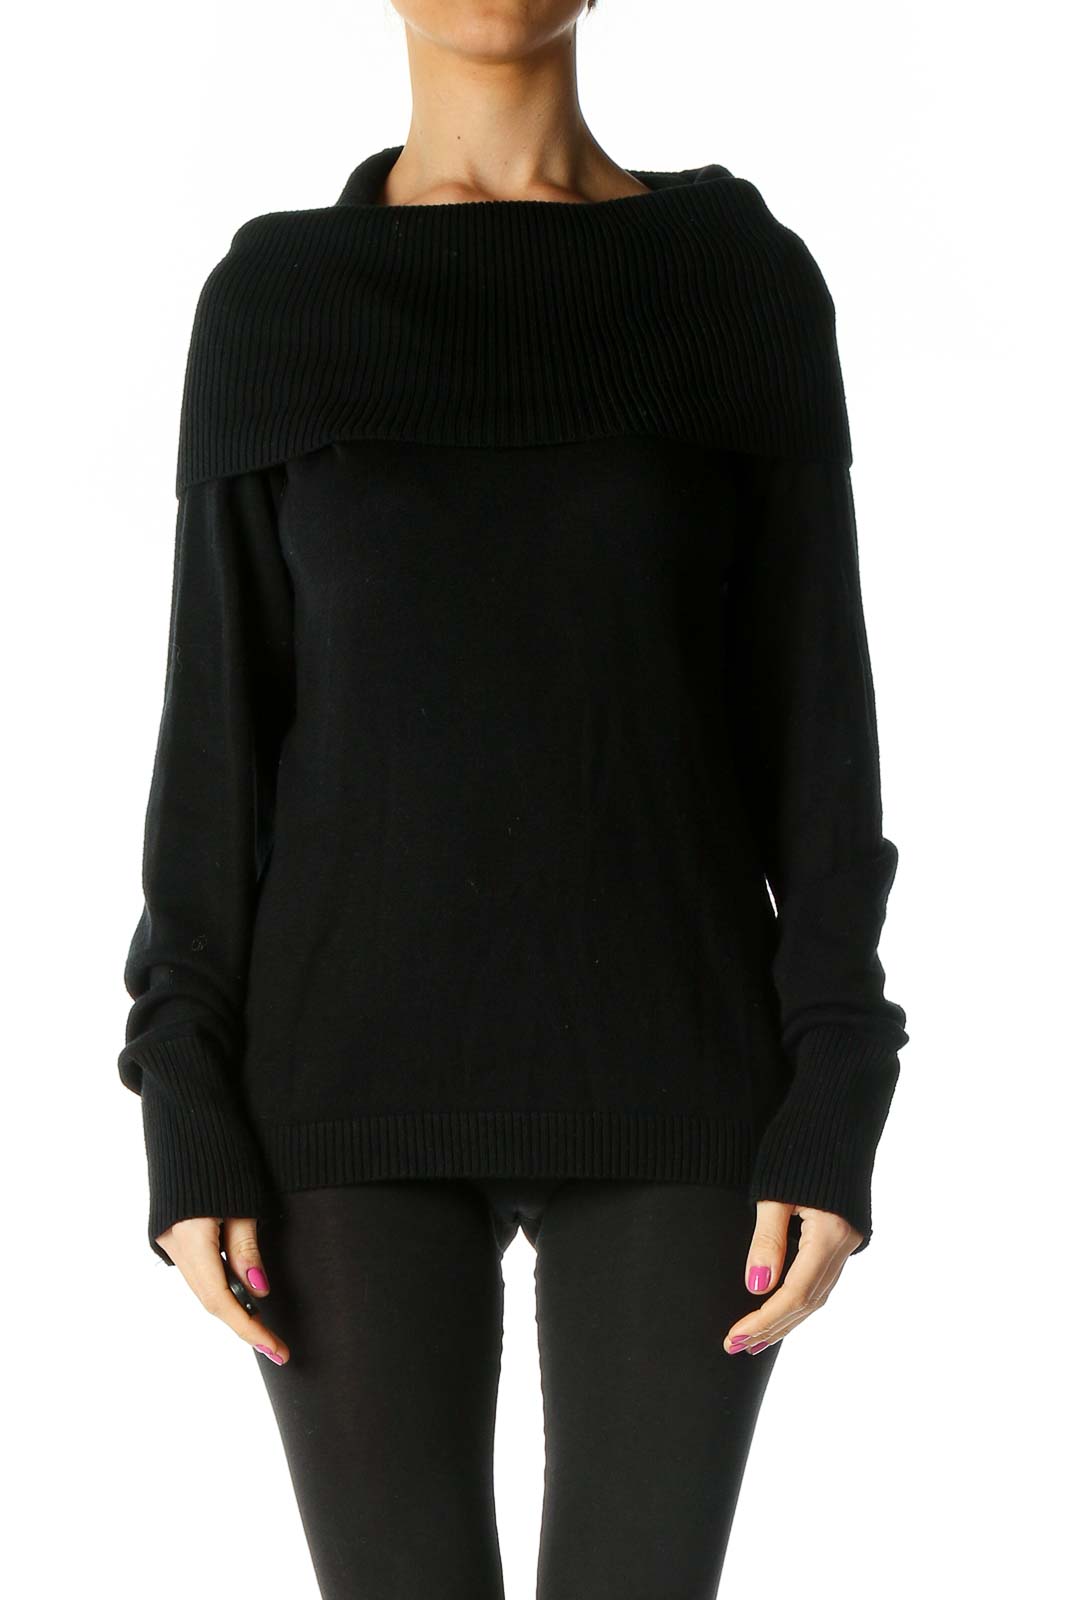 Black Solid Retro Sweater Front